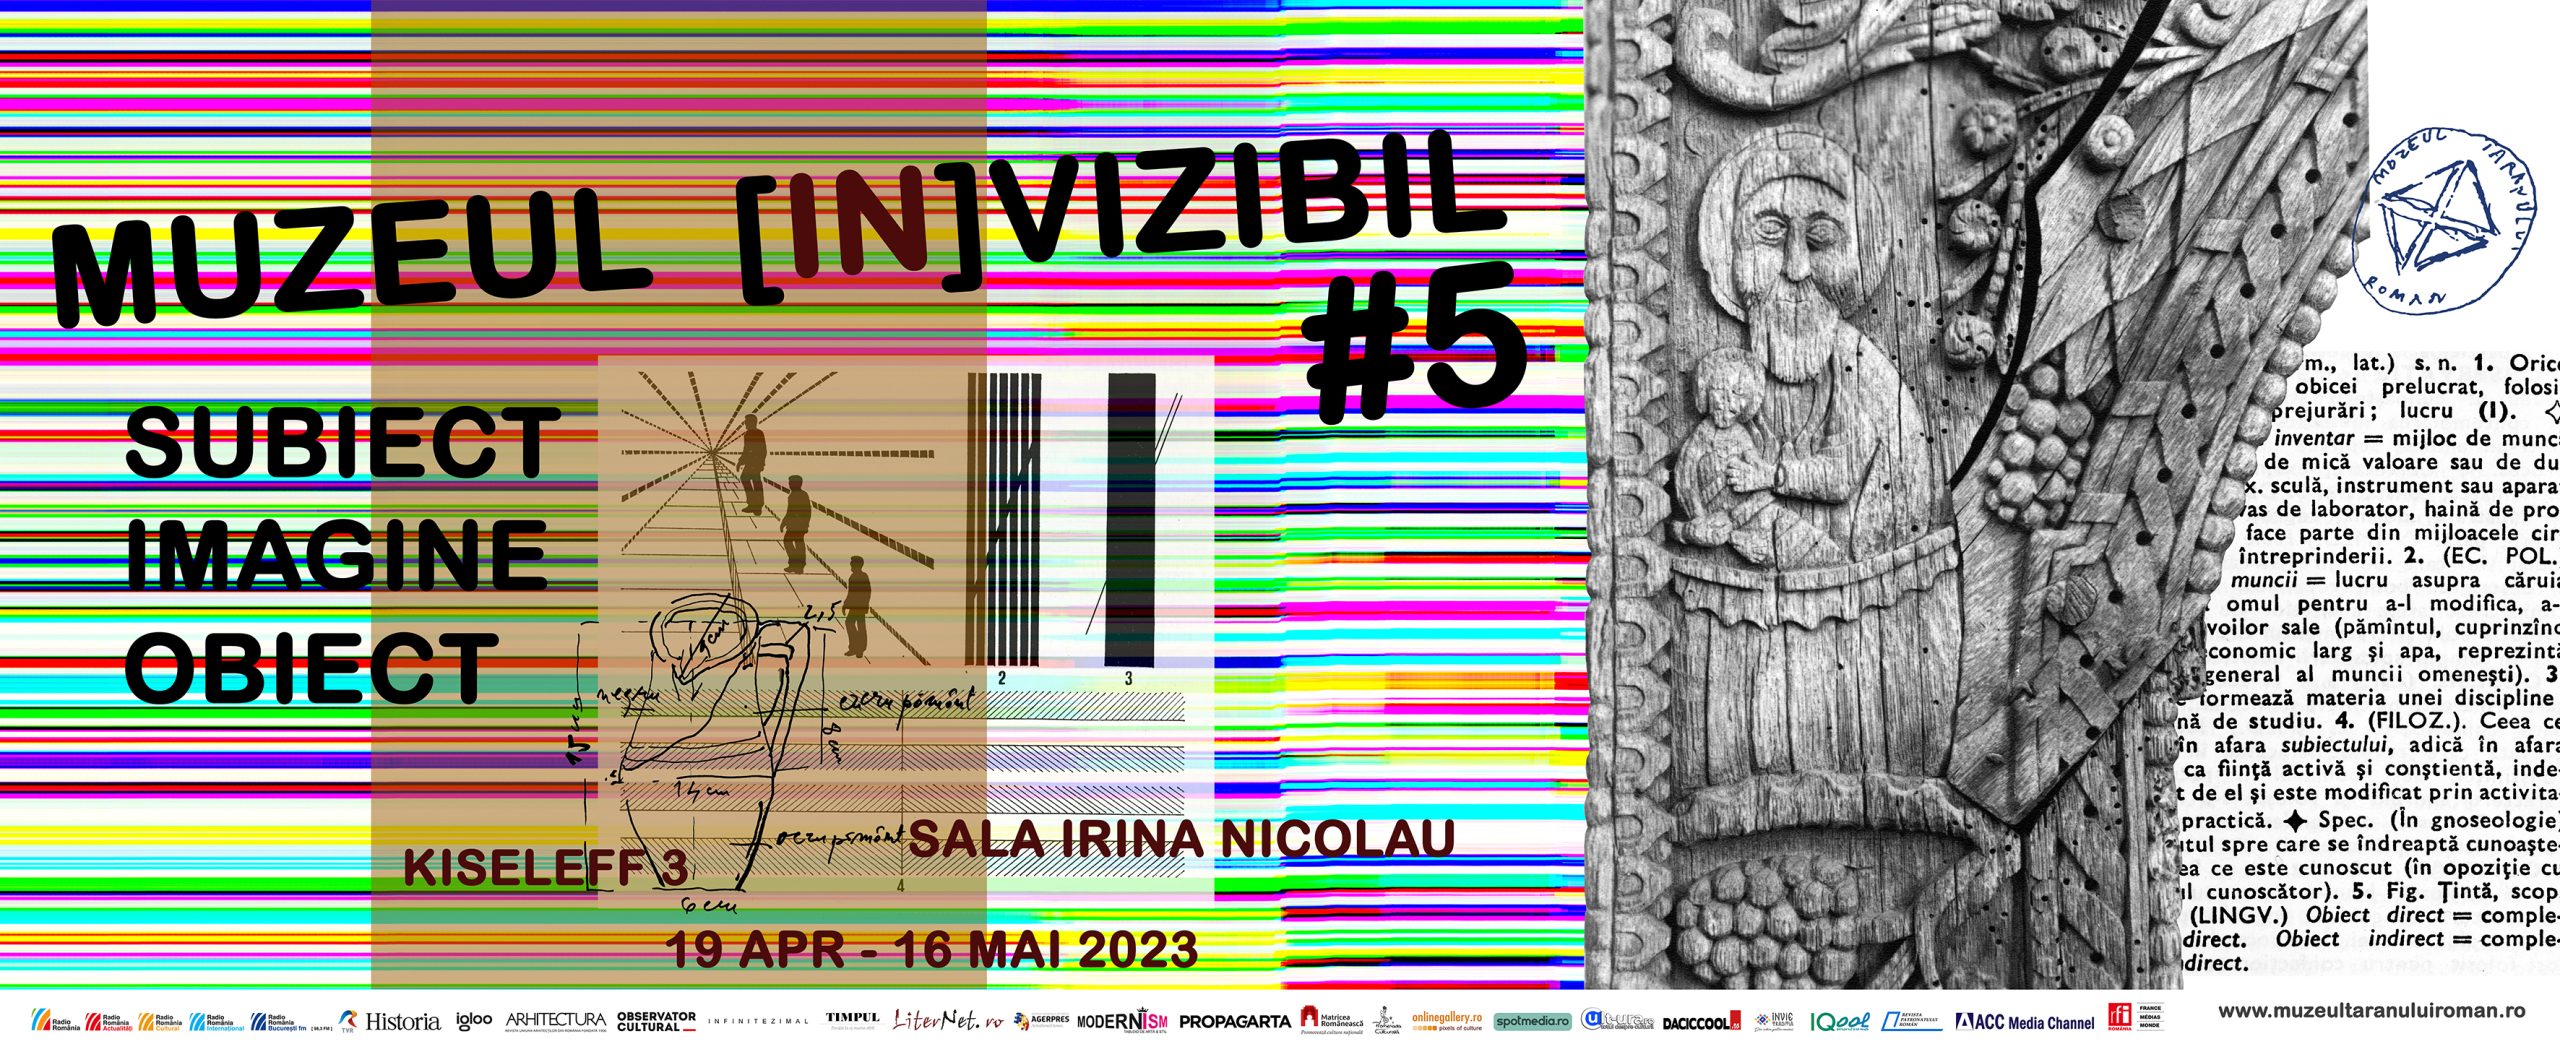 Muzeul [in]vizibil #5. Subiect, imagine, obiect. 19.04-16.05.2023 | sala Irina Nicolau